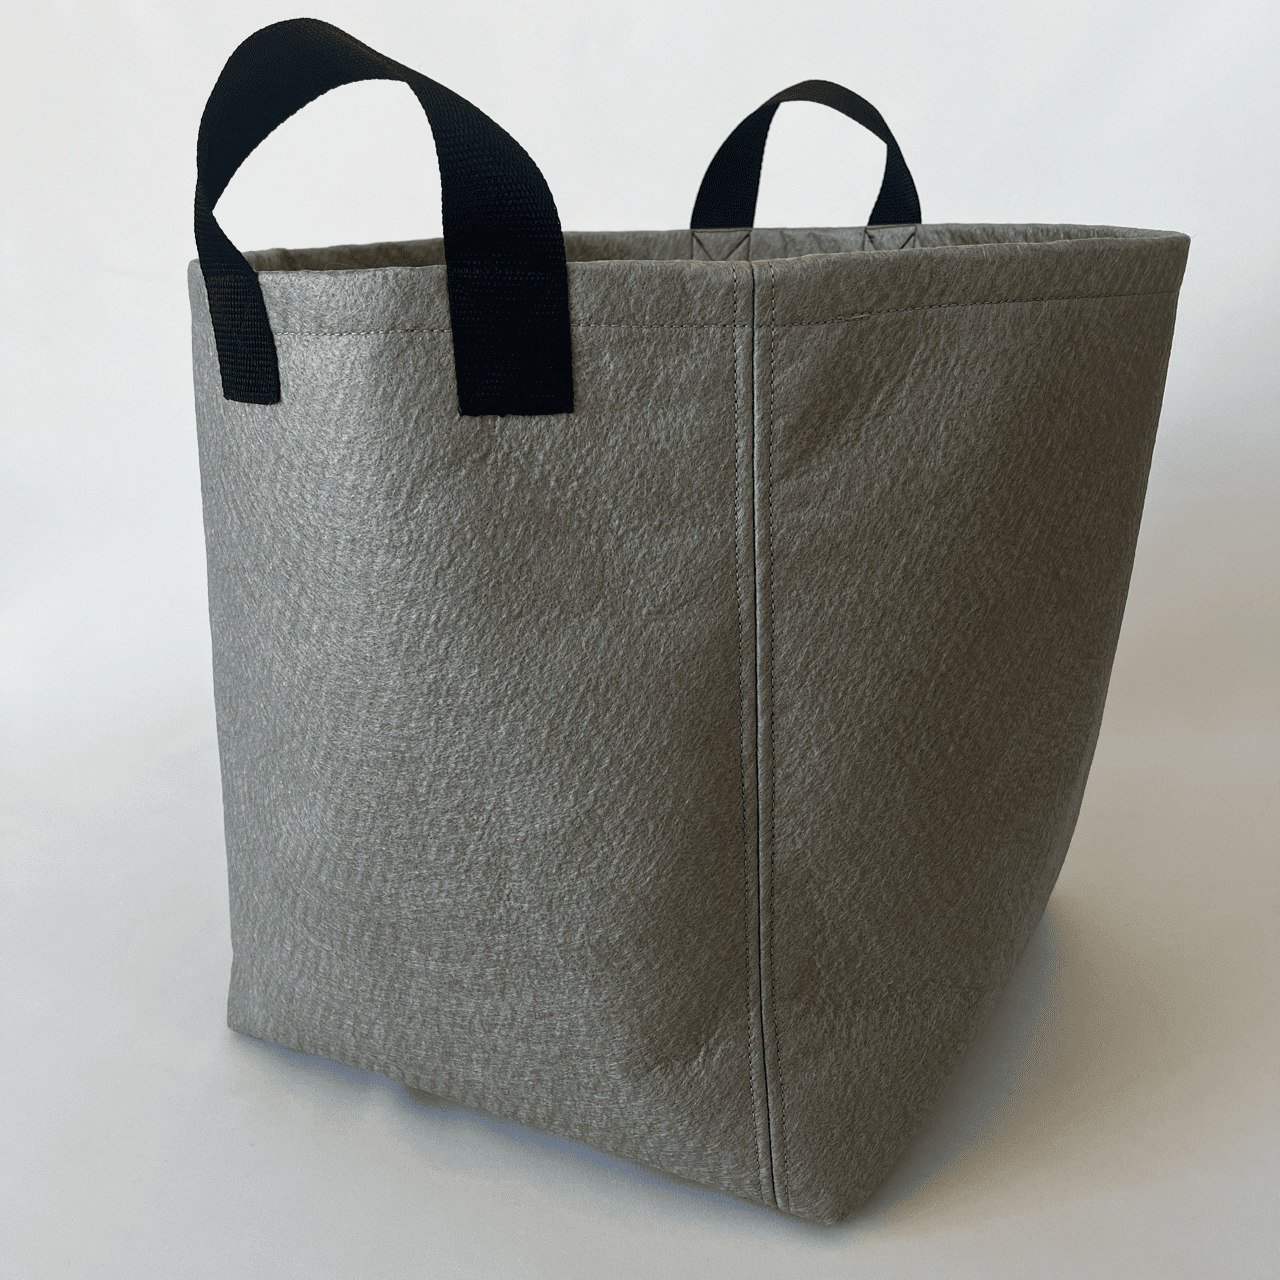 30 Litre Grow Bag | The Grow Bag Company | Grow Bags | South Africa